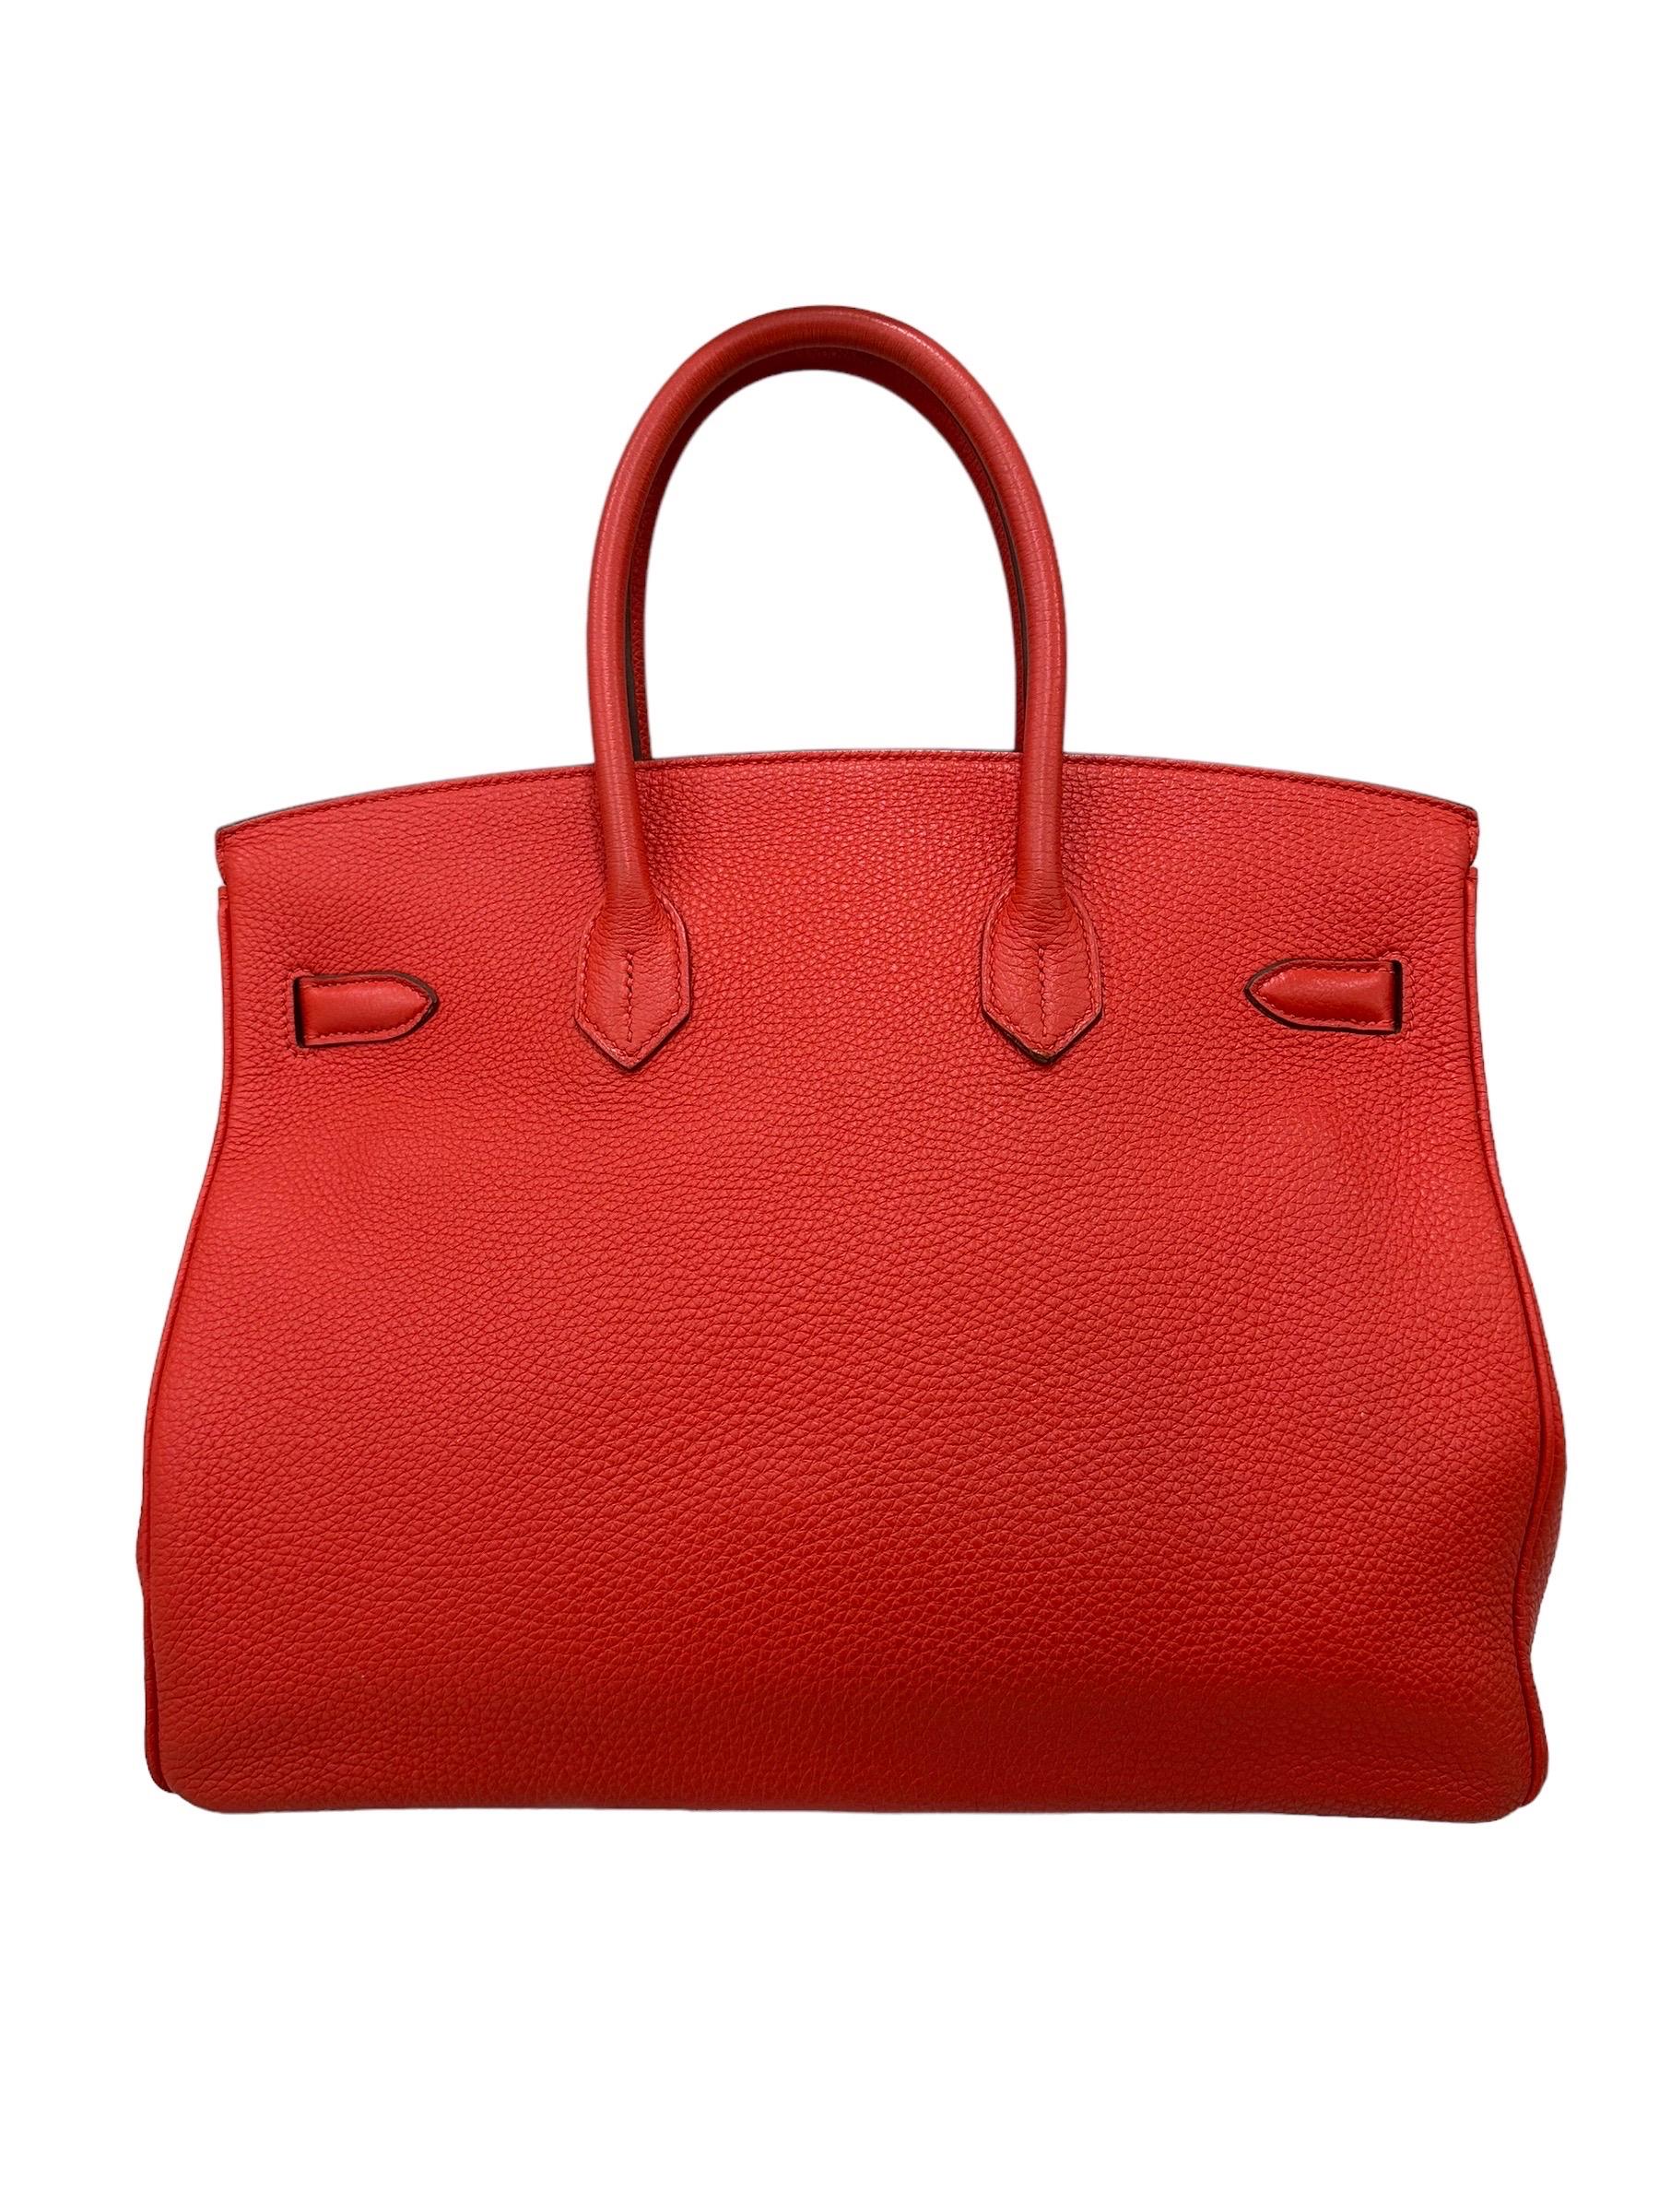 2011 Hermès Birkin 35 Togo Leather Rouge Capucine Top Handle Bag en vente 3